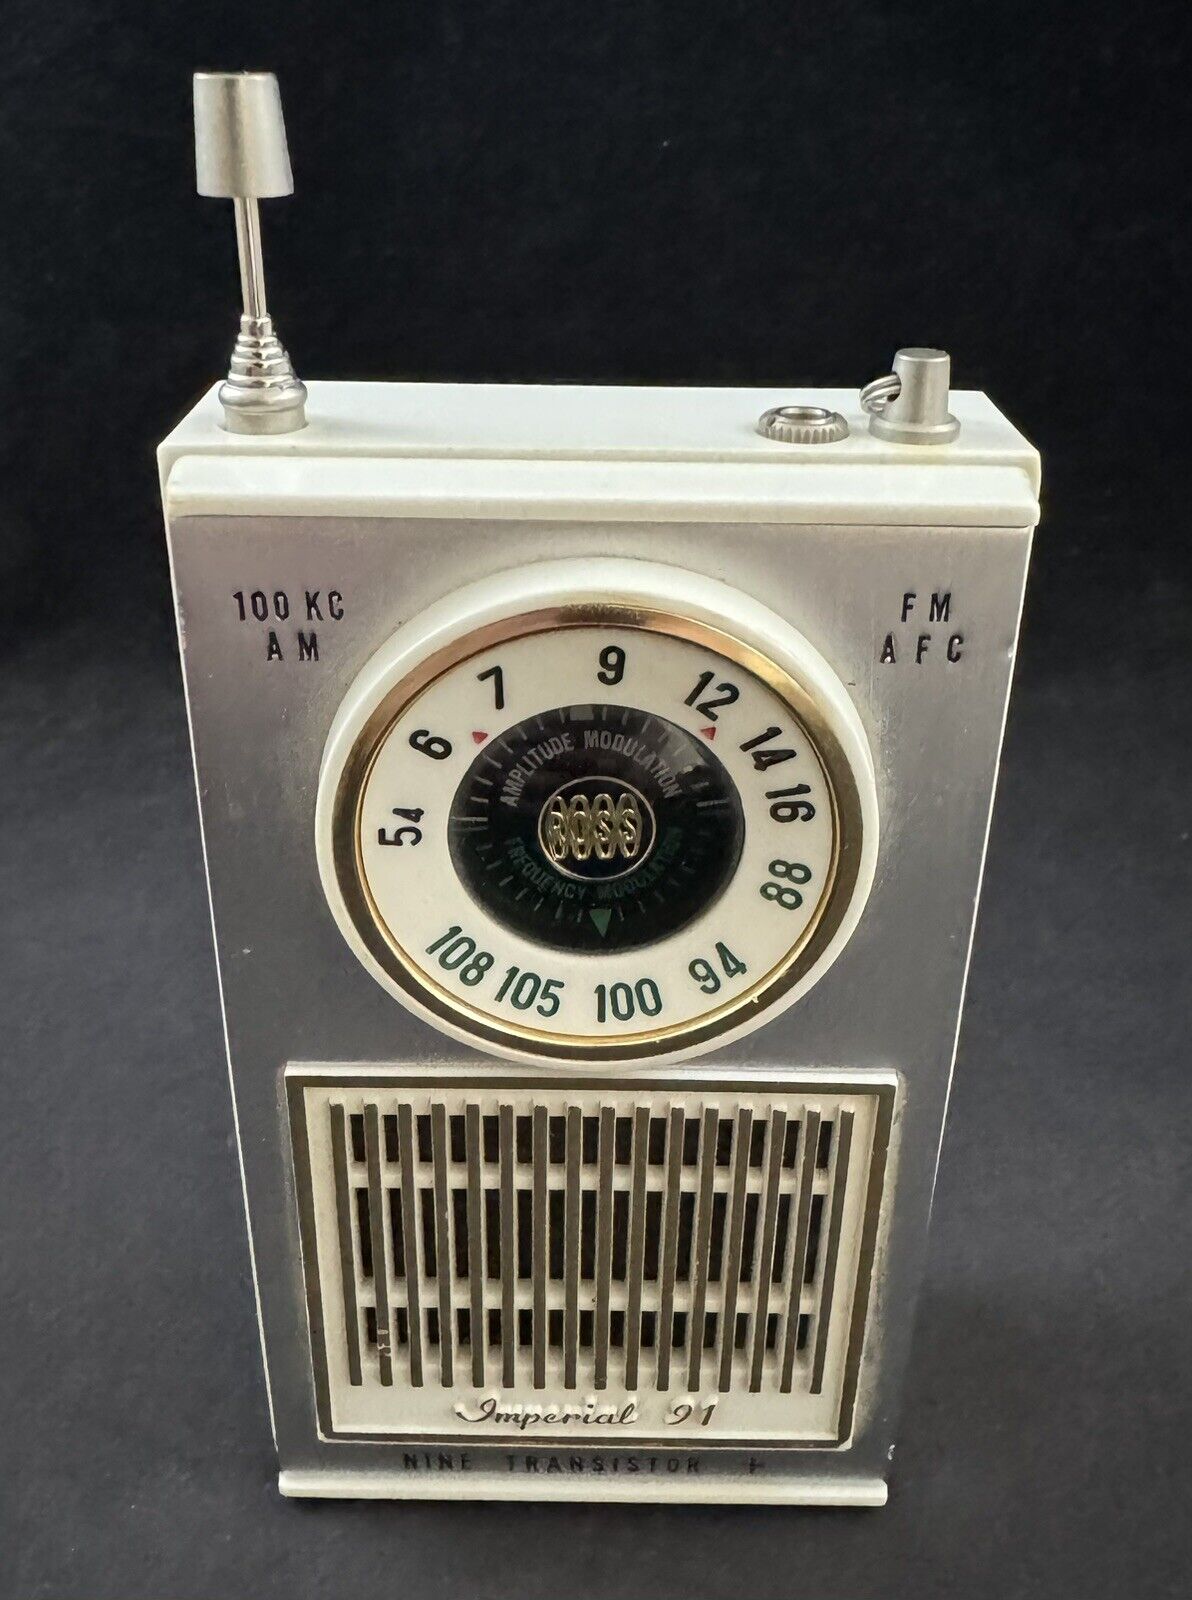 Vintage Imperial-91 AM/FM 9-Transistor Radio - Made in Japan